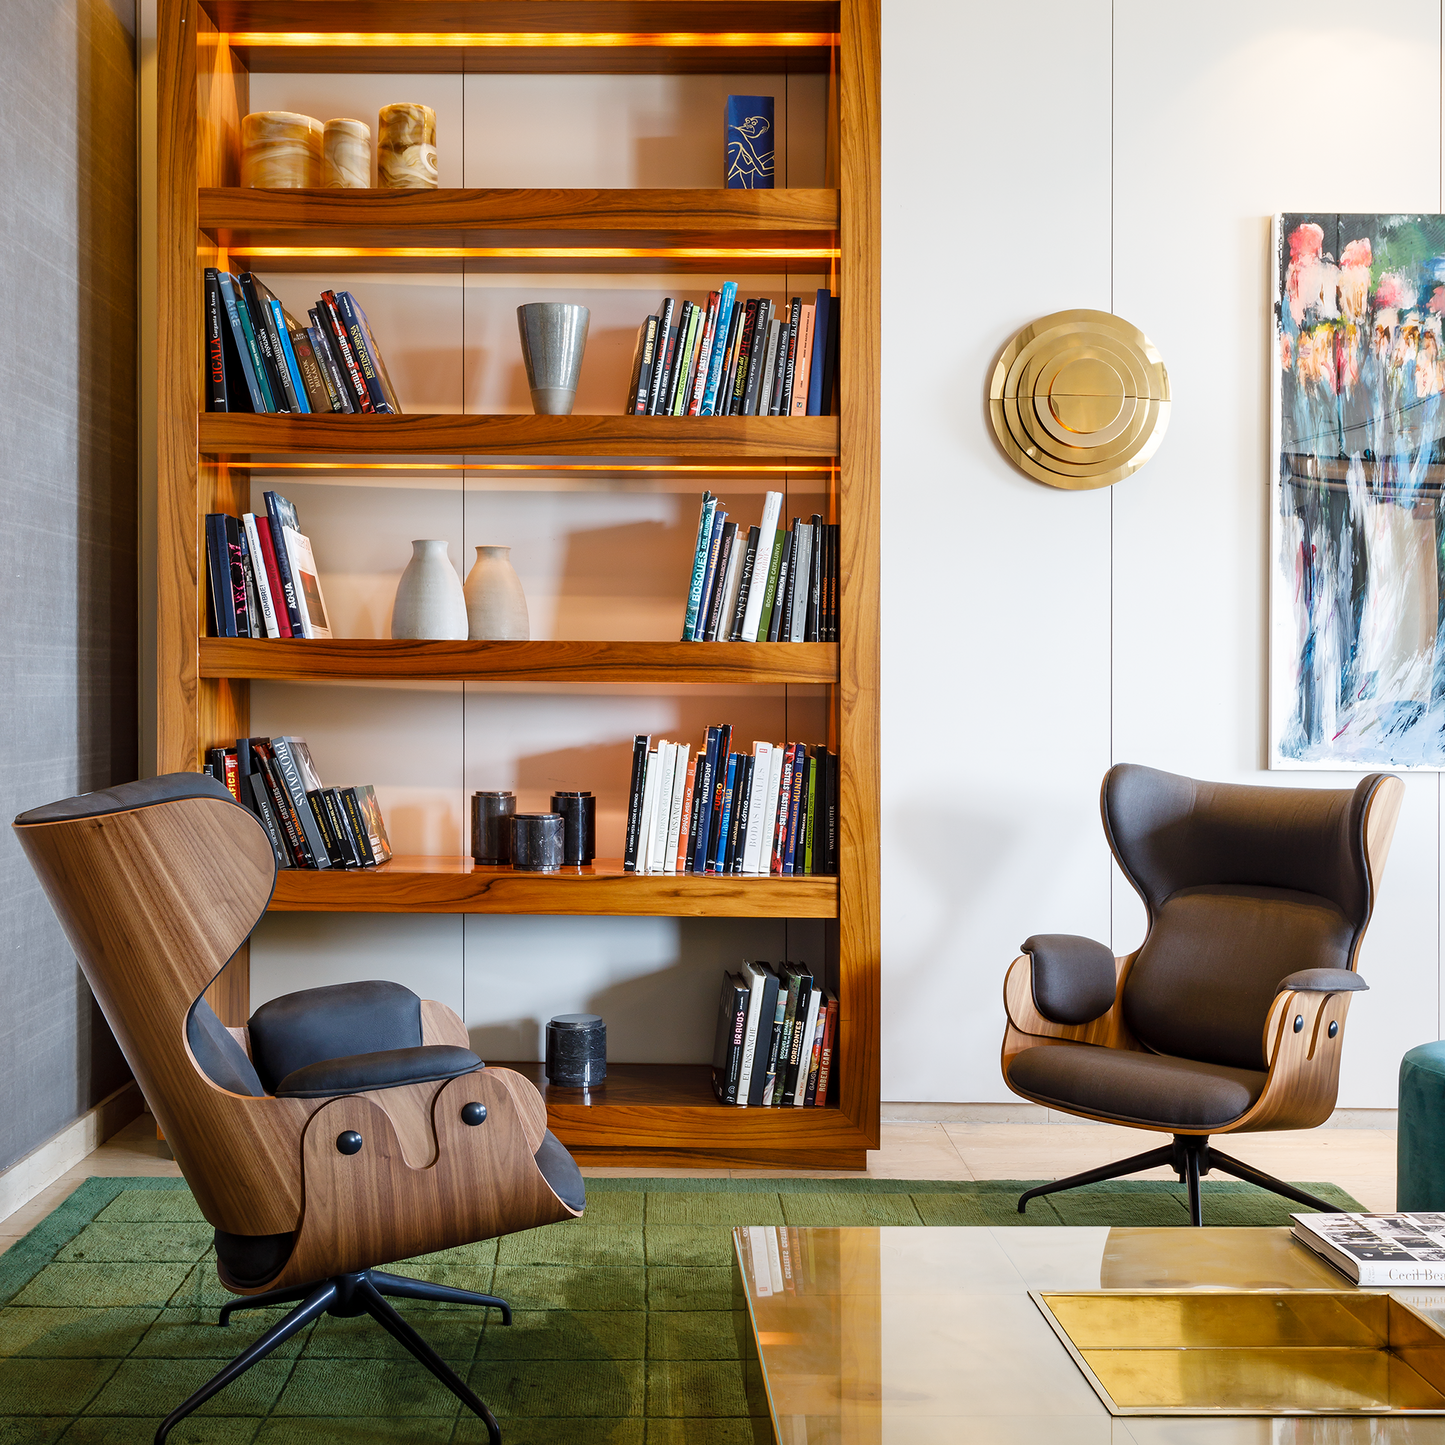 BD Barcelona Design Lounger armchair fotelis